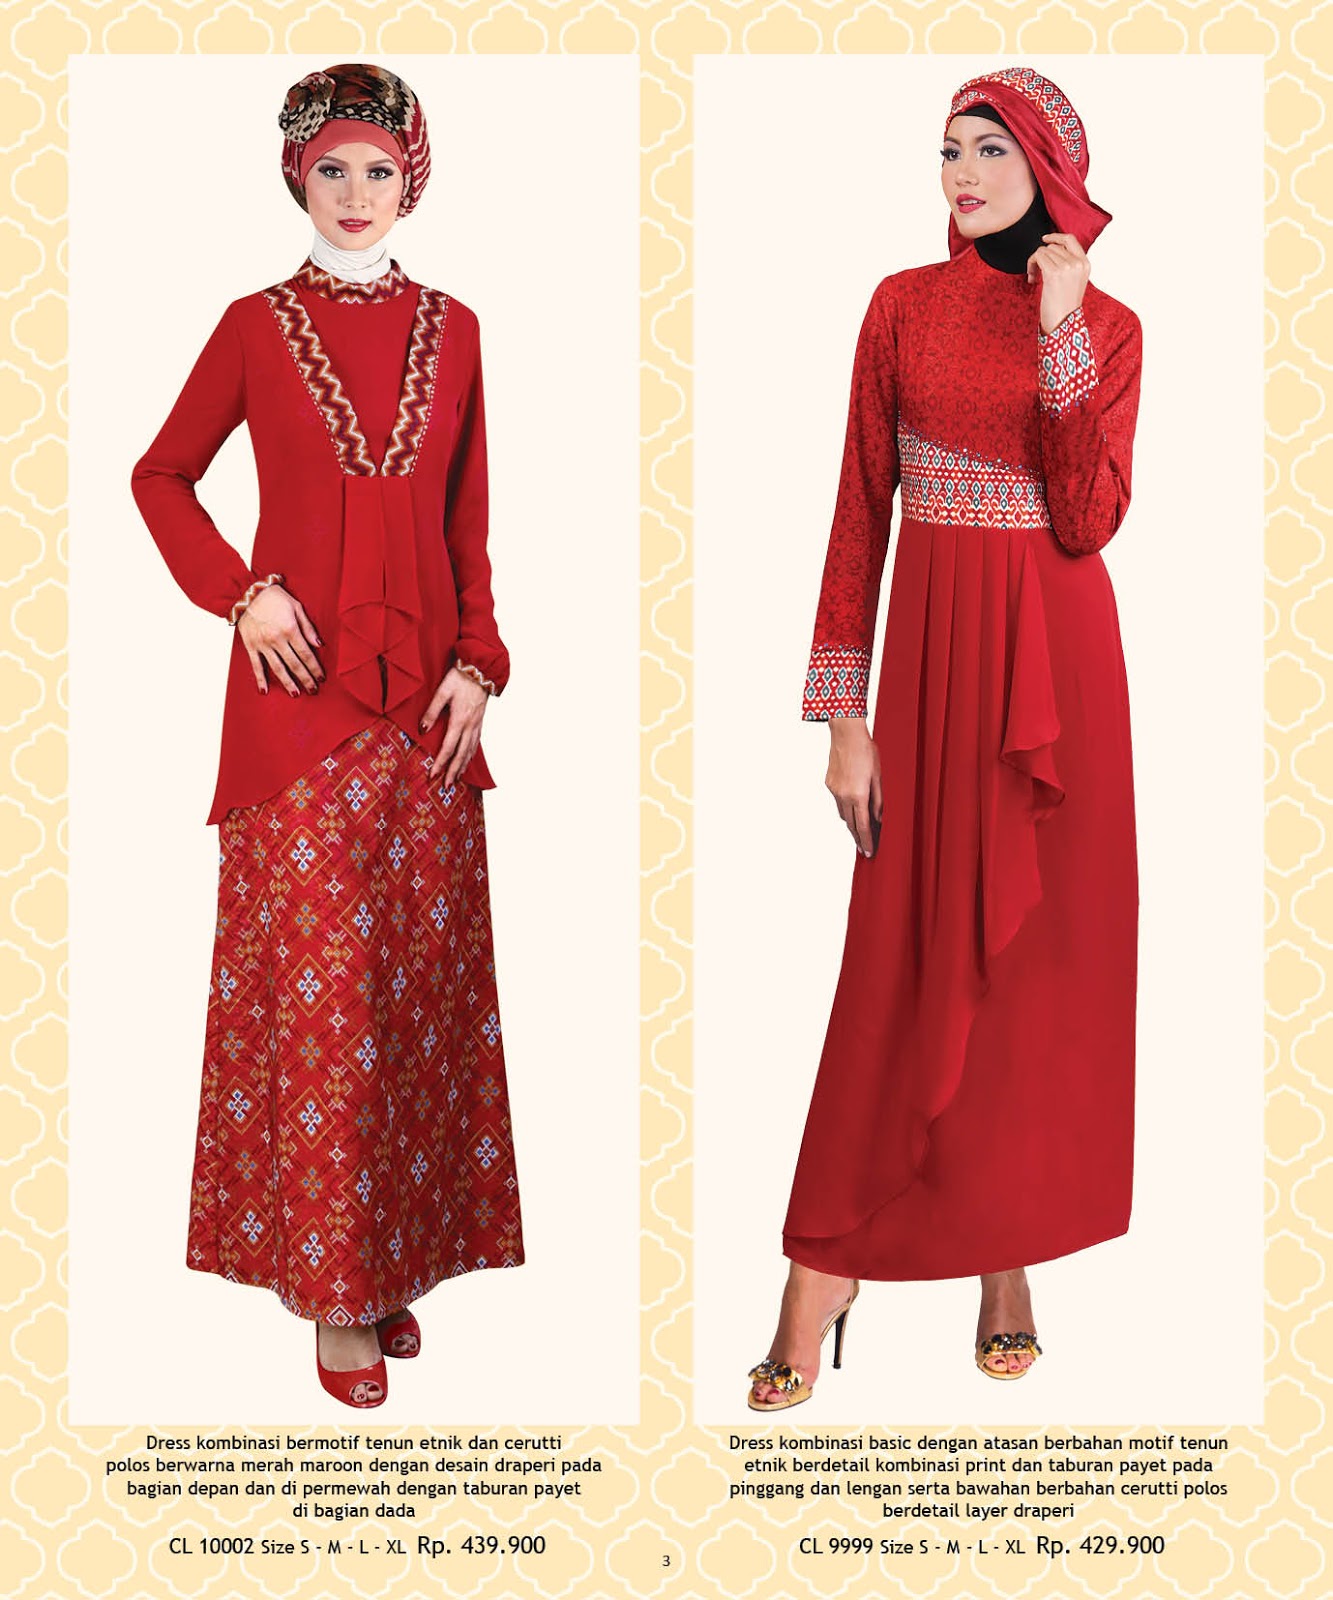 CALOSA Muslim Fashion